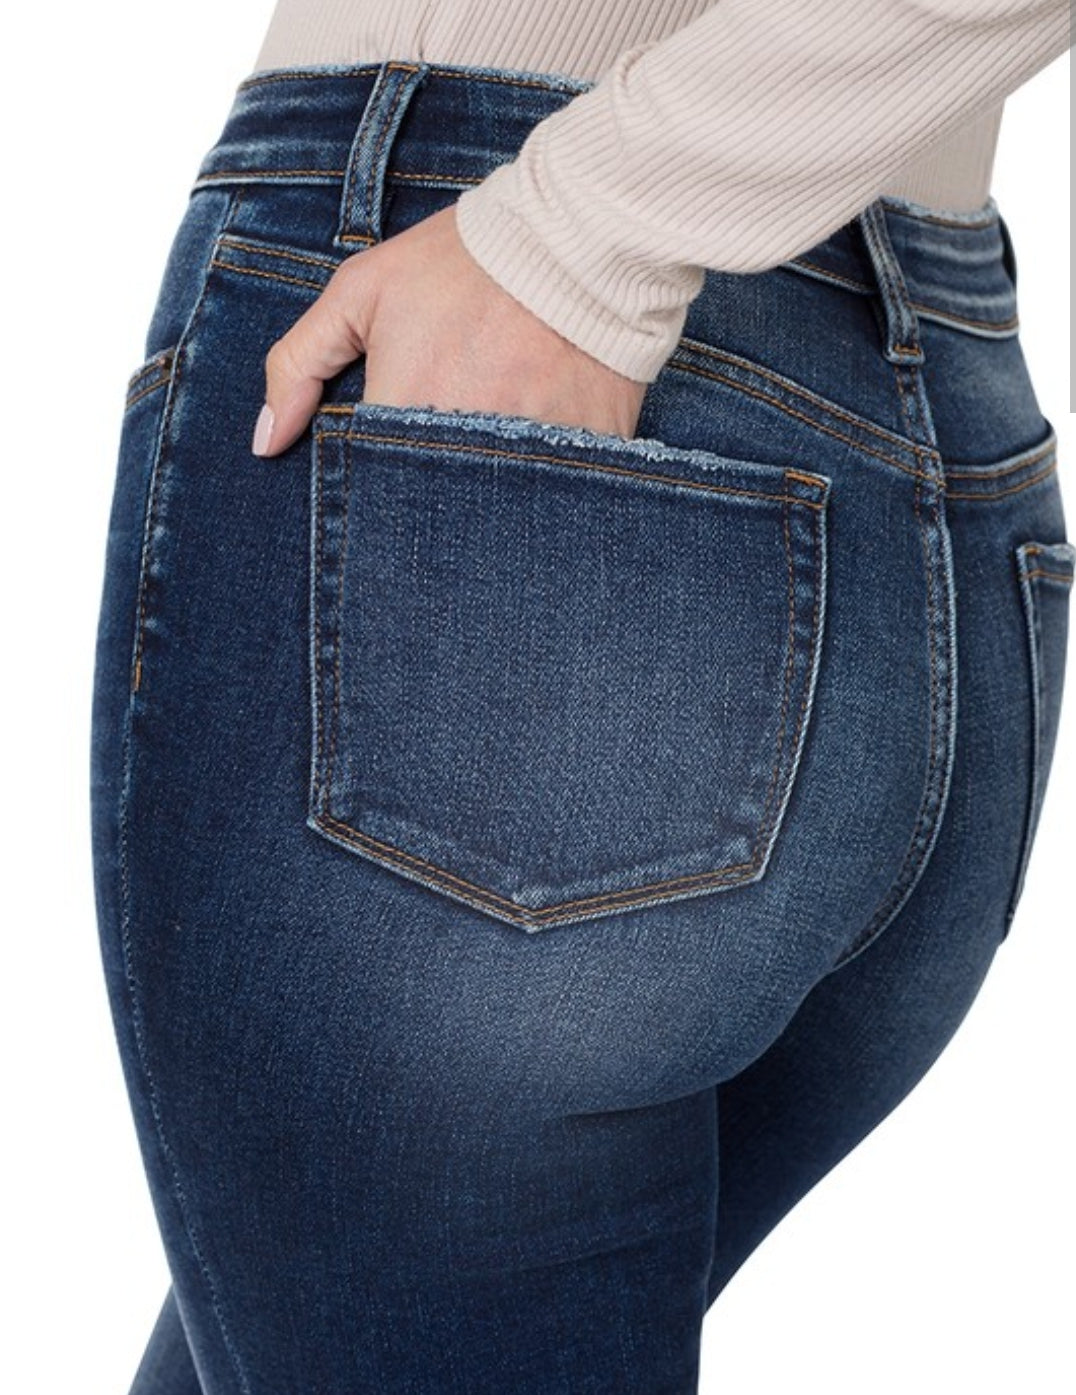 Sandra Bootcut Jeans * on sale